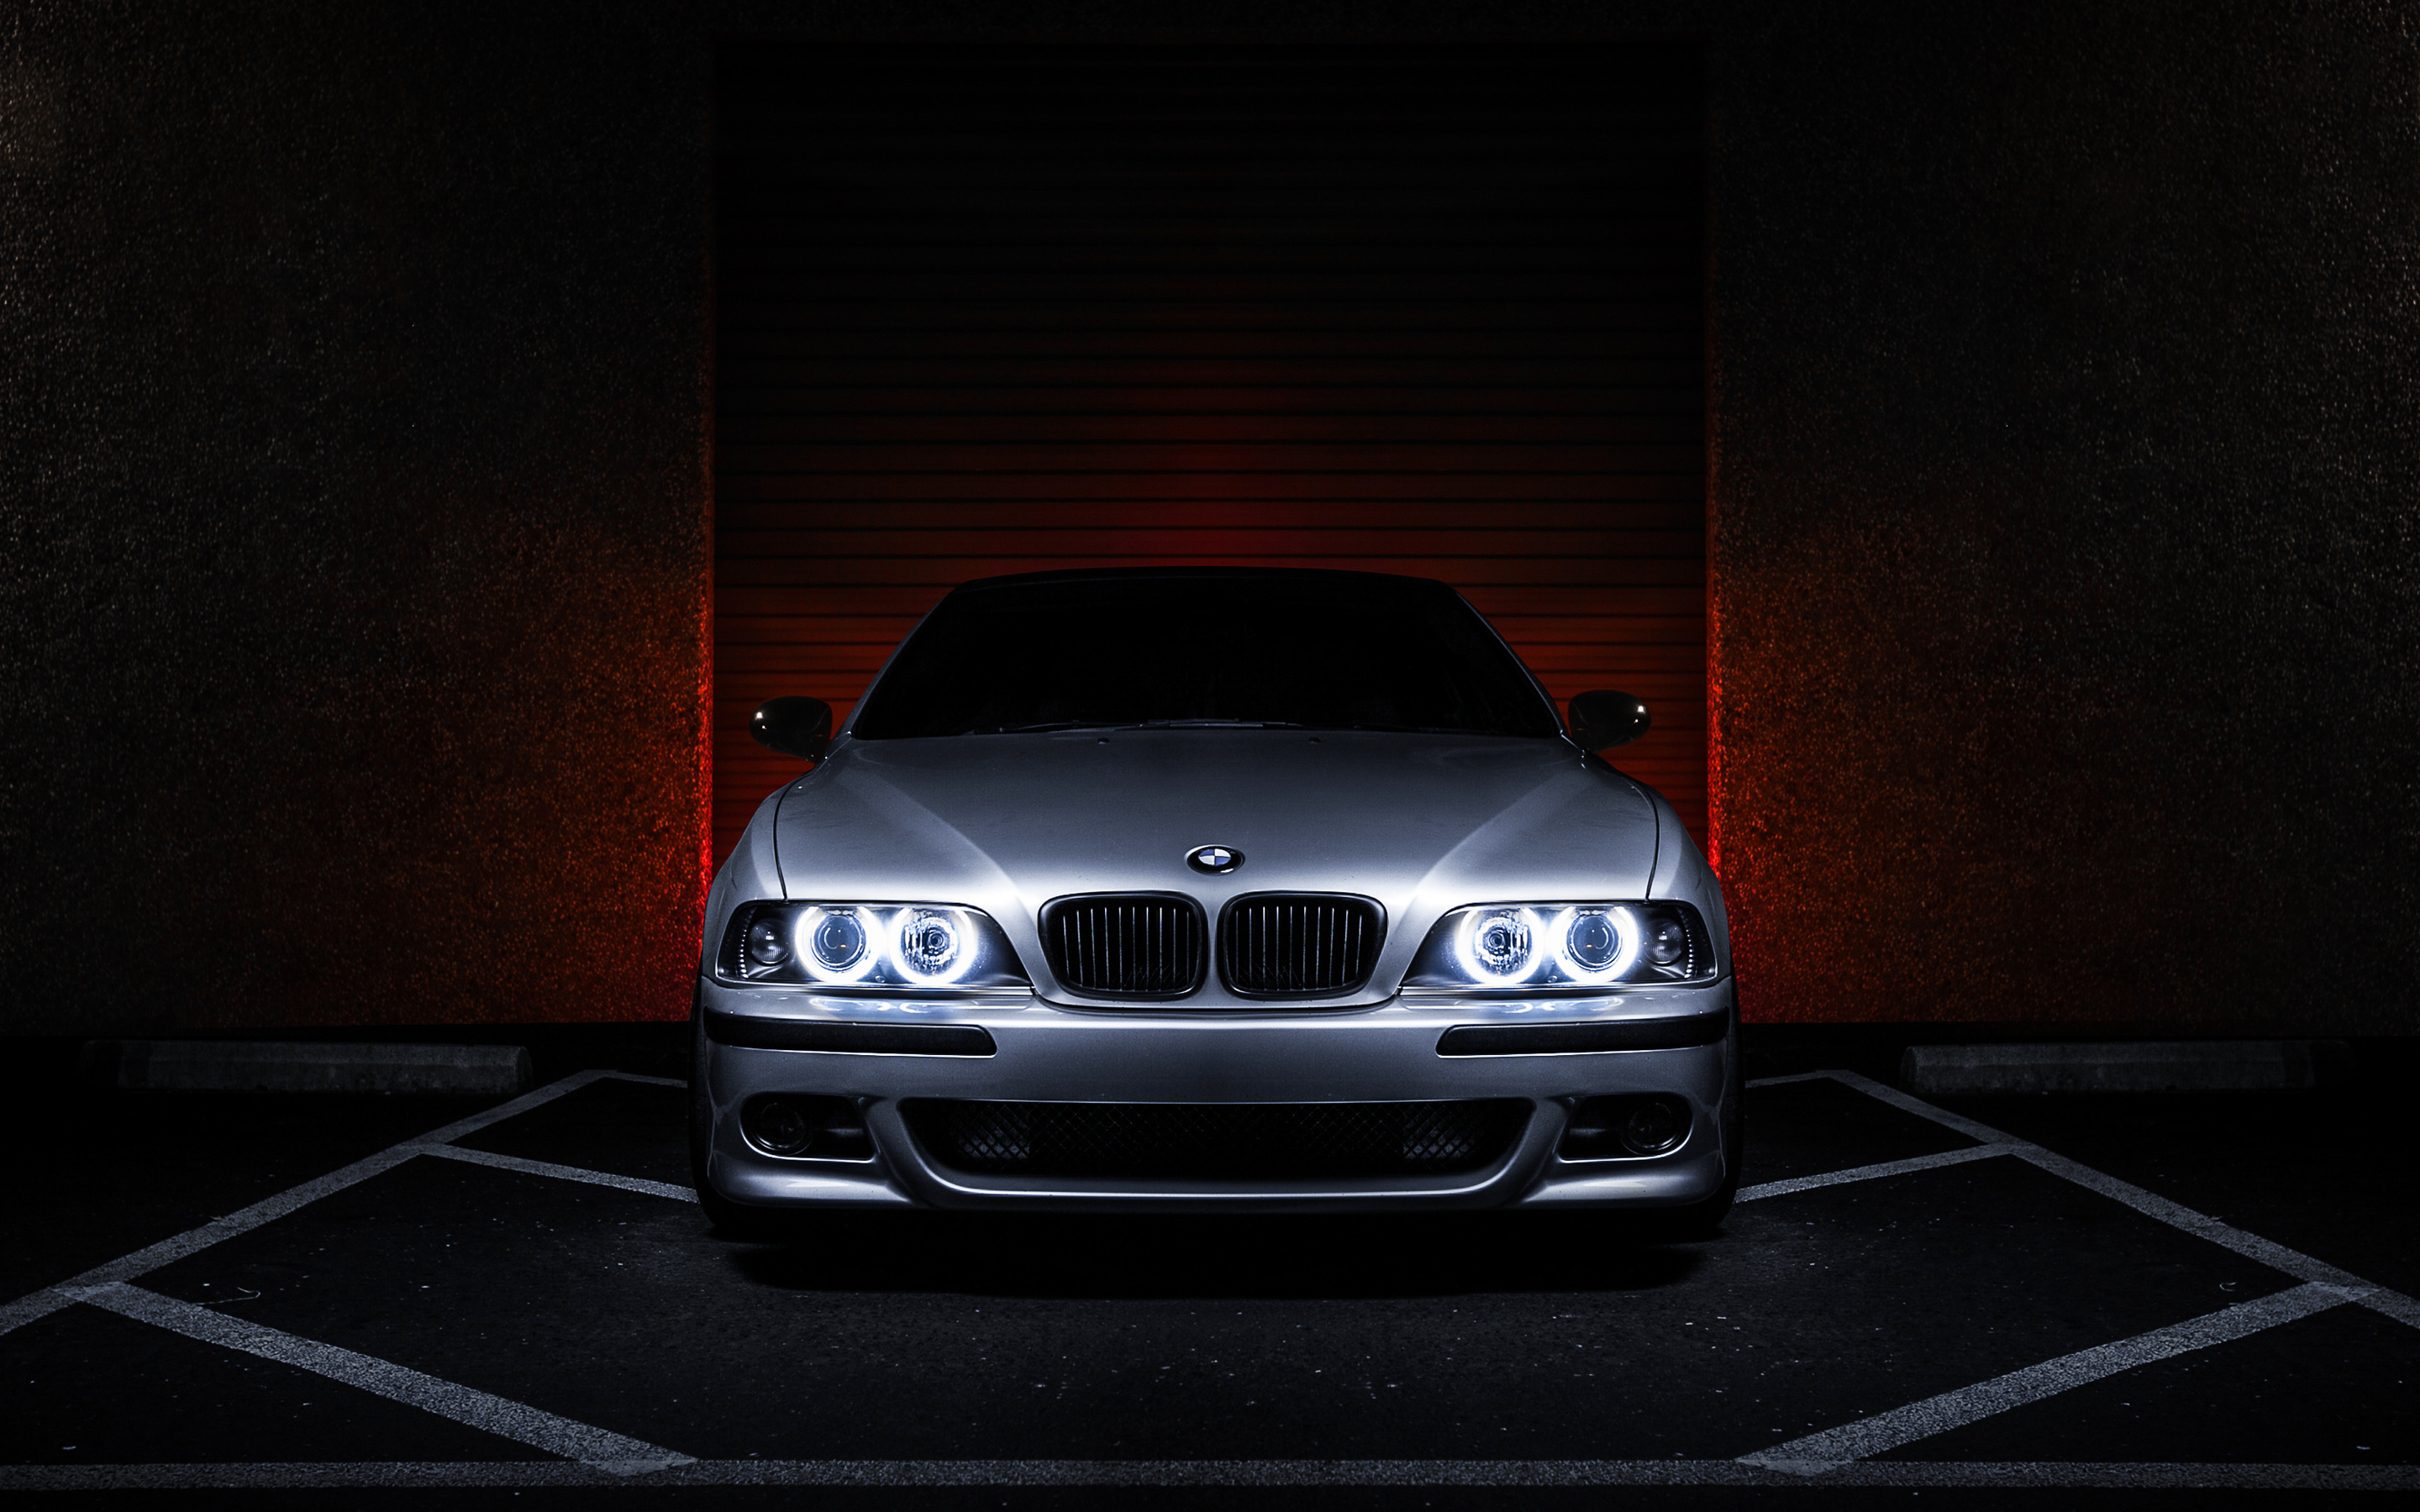 Download wallpaper BMW M parking, E headlights, silver M5